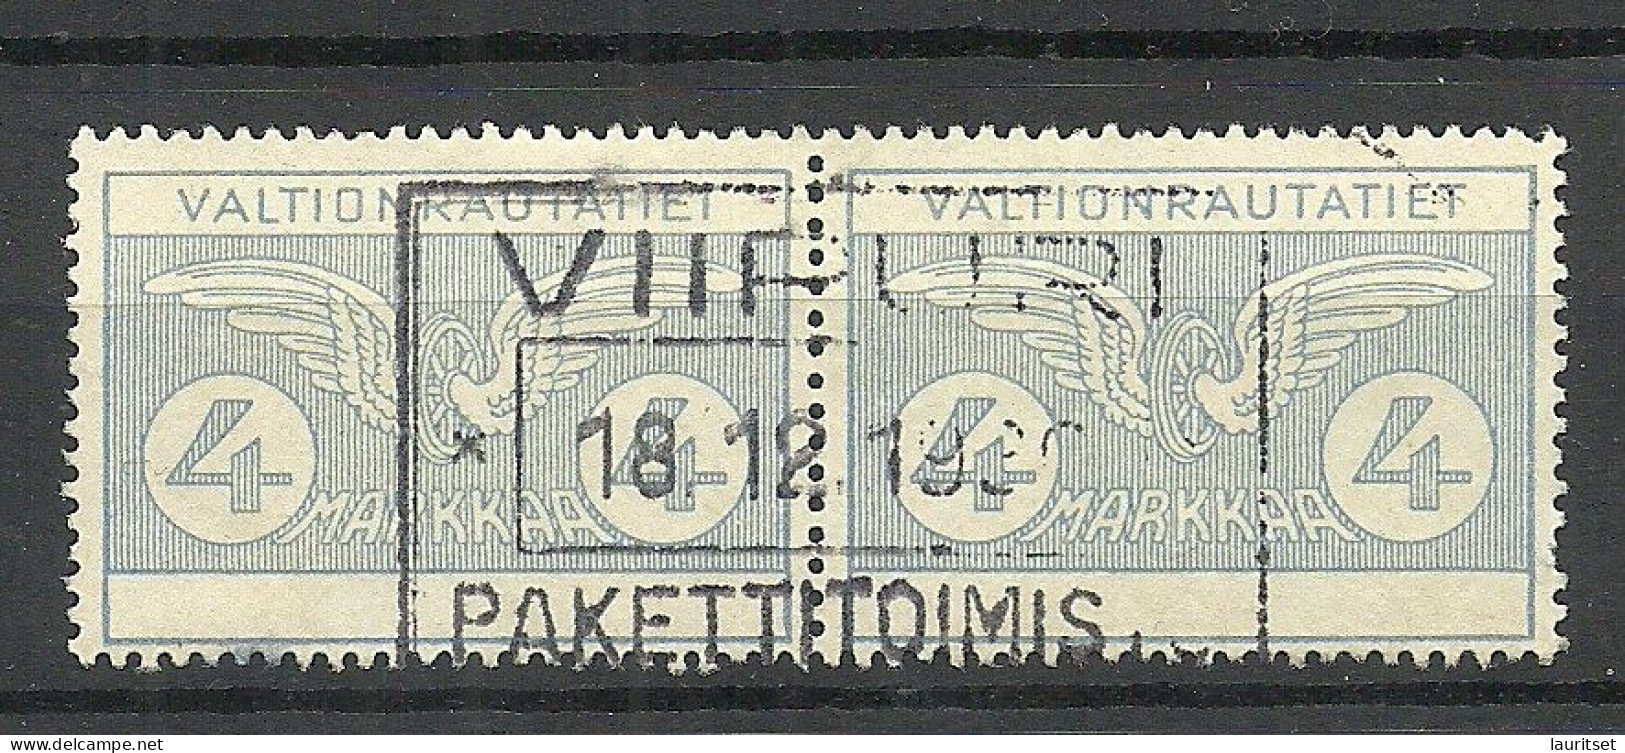 FINLAND FINNLAND 1930ies O Viipuri Railway Stamp 4 MK As Pair - Colis Postaux